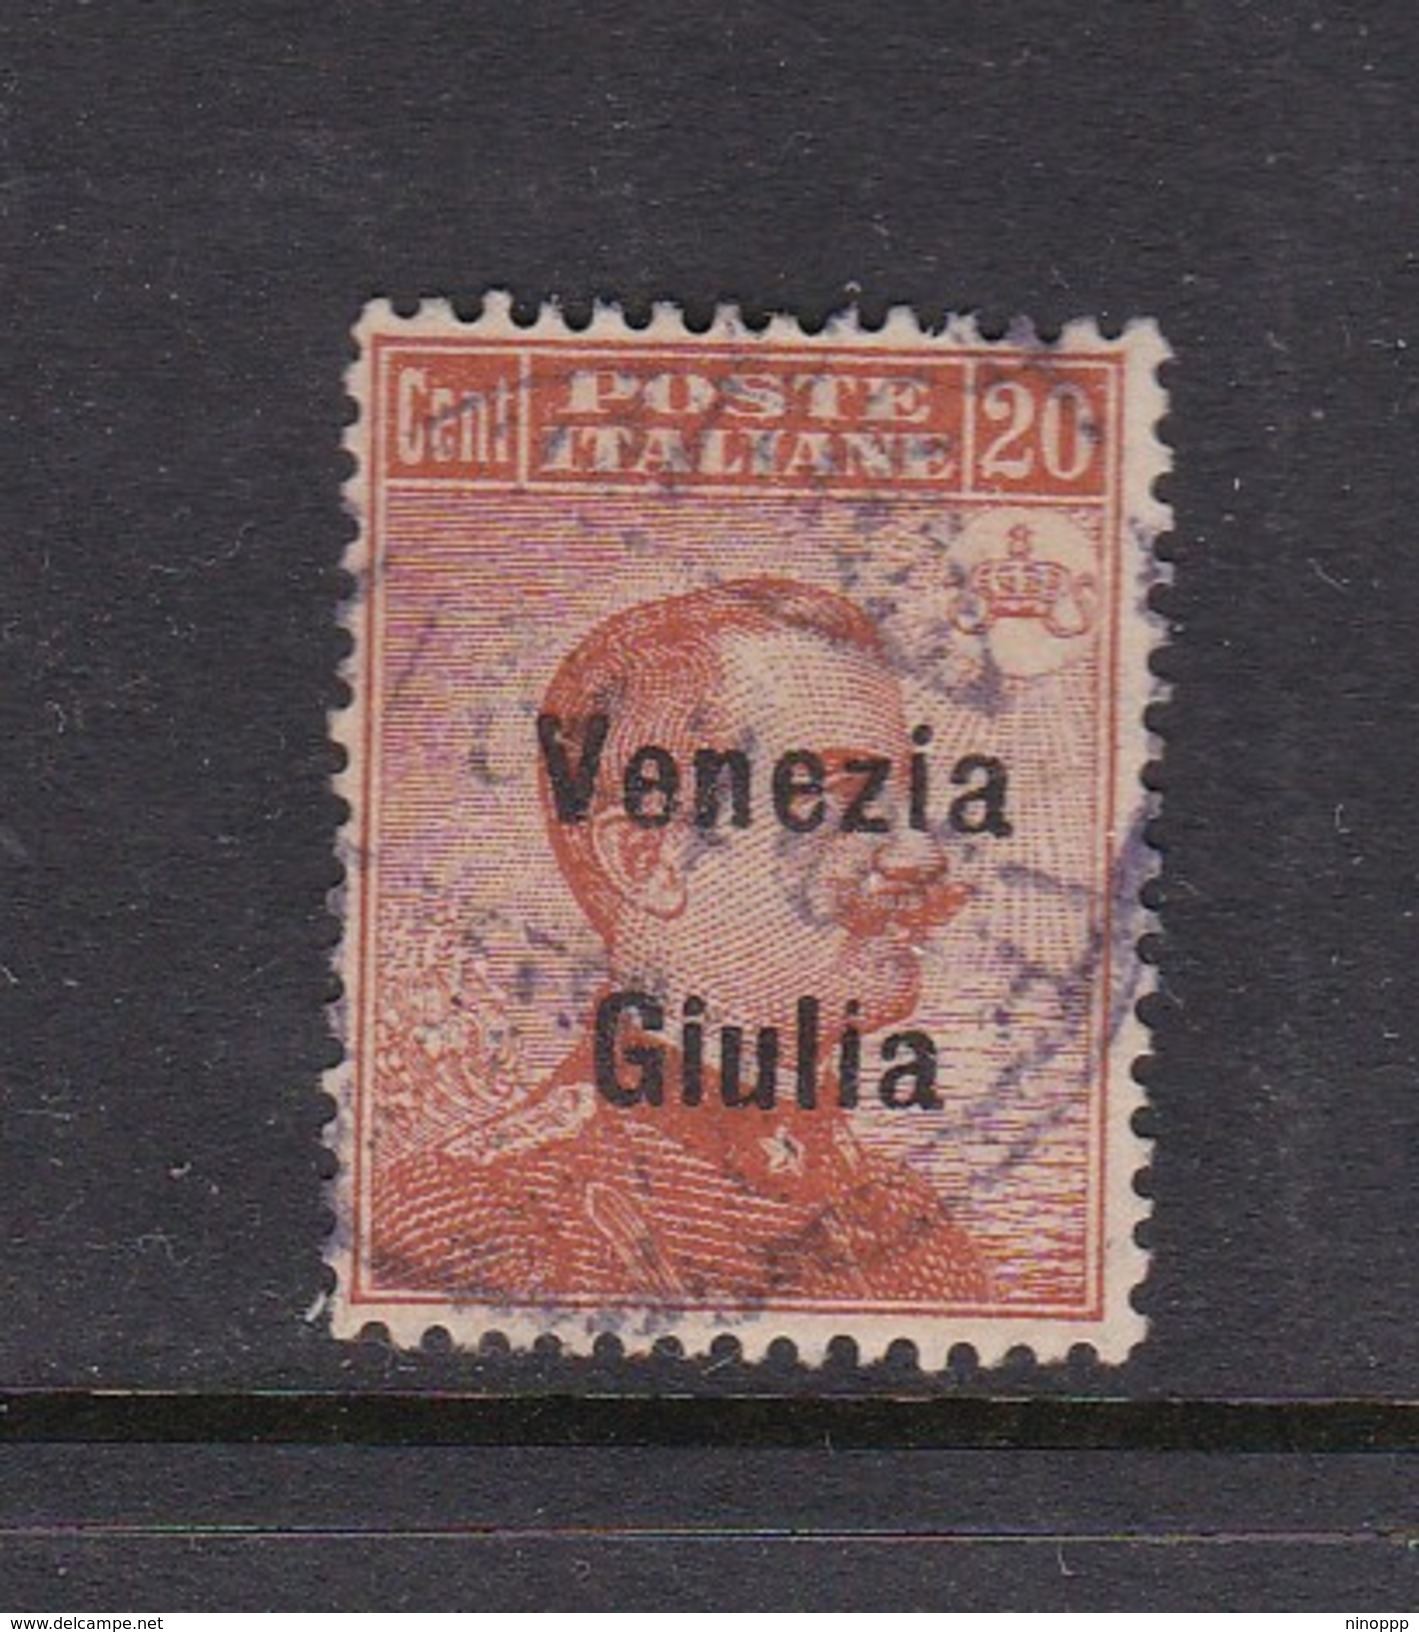 Venezia Giulia N24 1918 Italian Stamps Overprinted 20c Brown Orange Used - Austrian Occupation